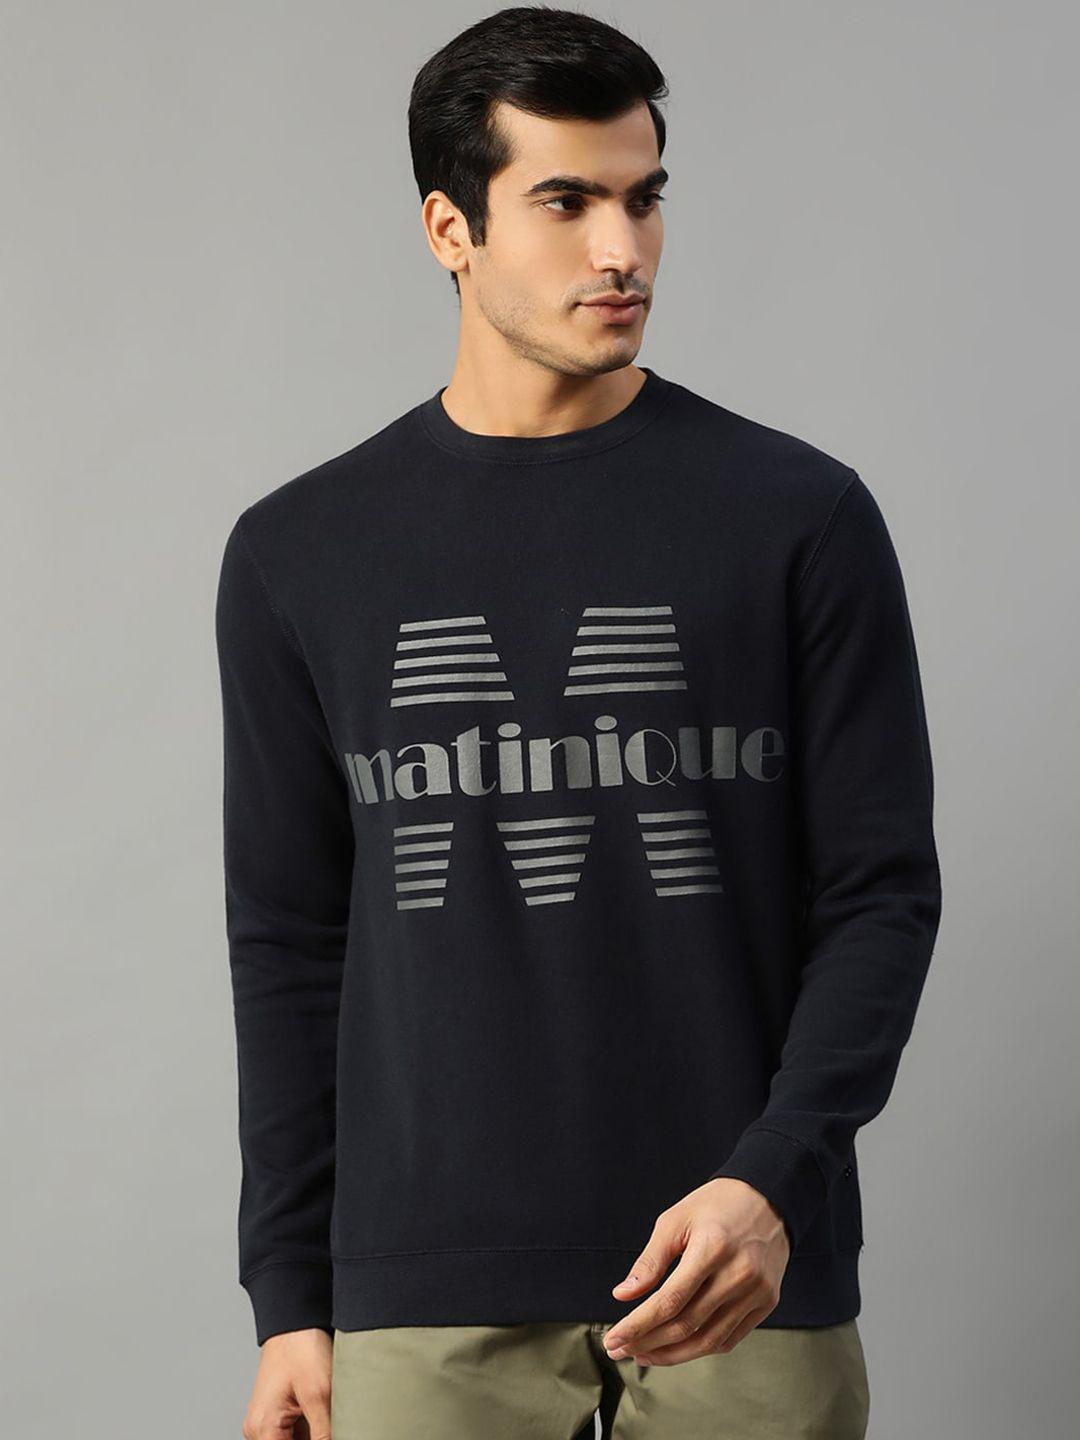 matinique men navy blue printed sweatshirt